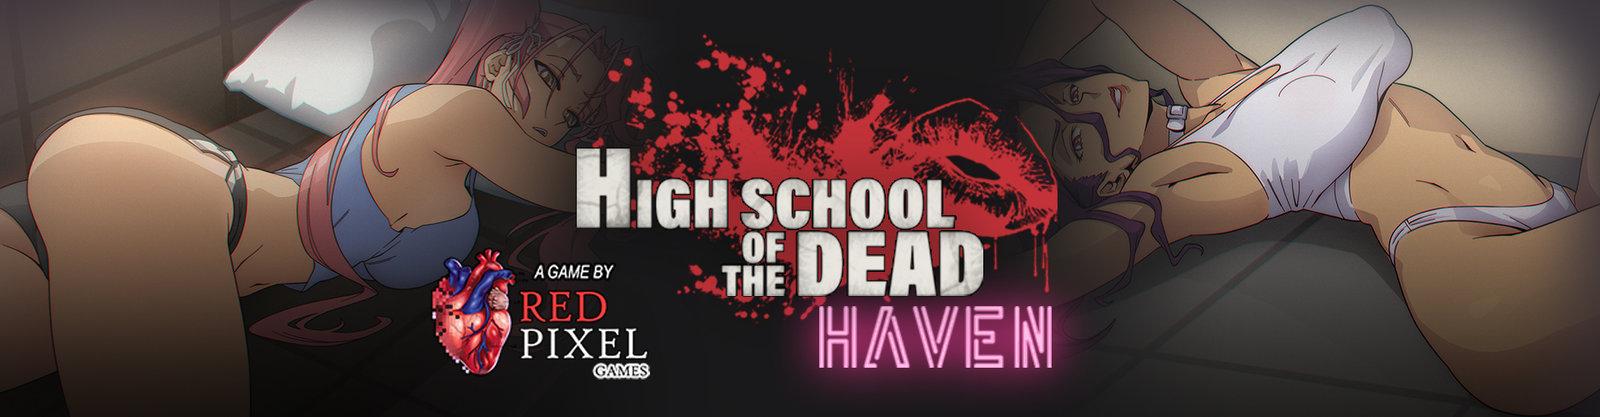 Highschool of the Dead: Haven 1.0 на Андроид (18+)